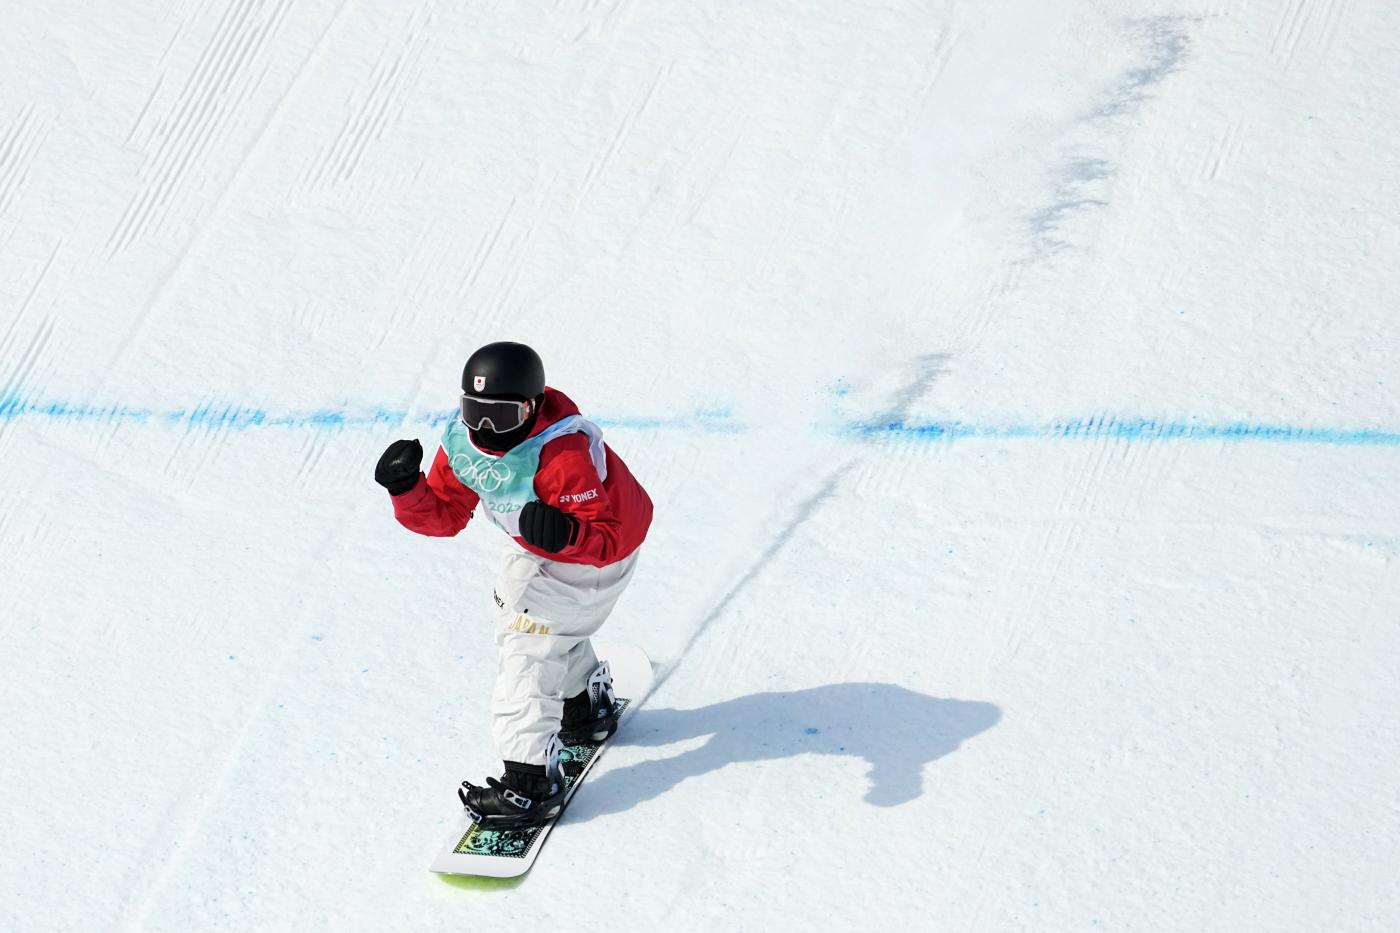 Snowboard, i giapponesi Kunitake e Murase si impongono nel big air di Copper Mountain. Ian Matteoli 14°